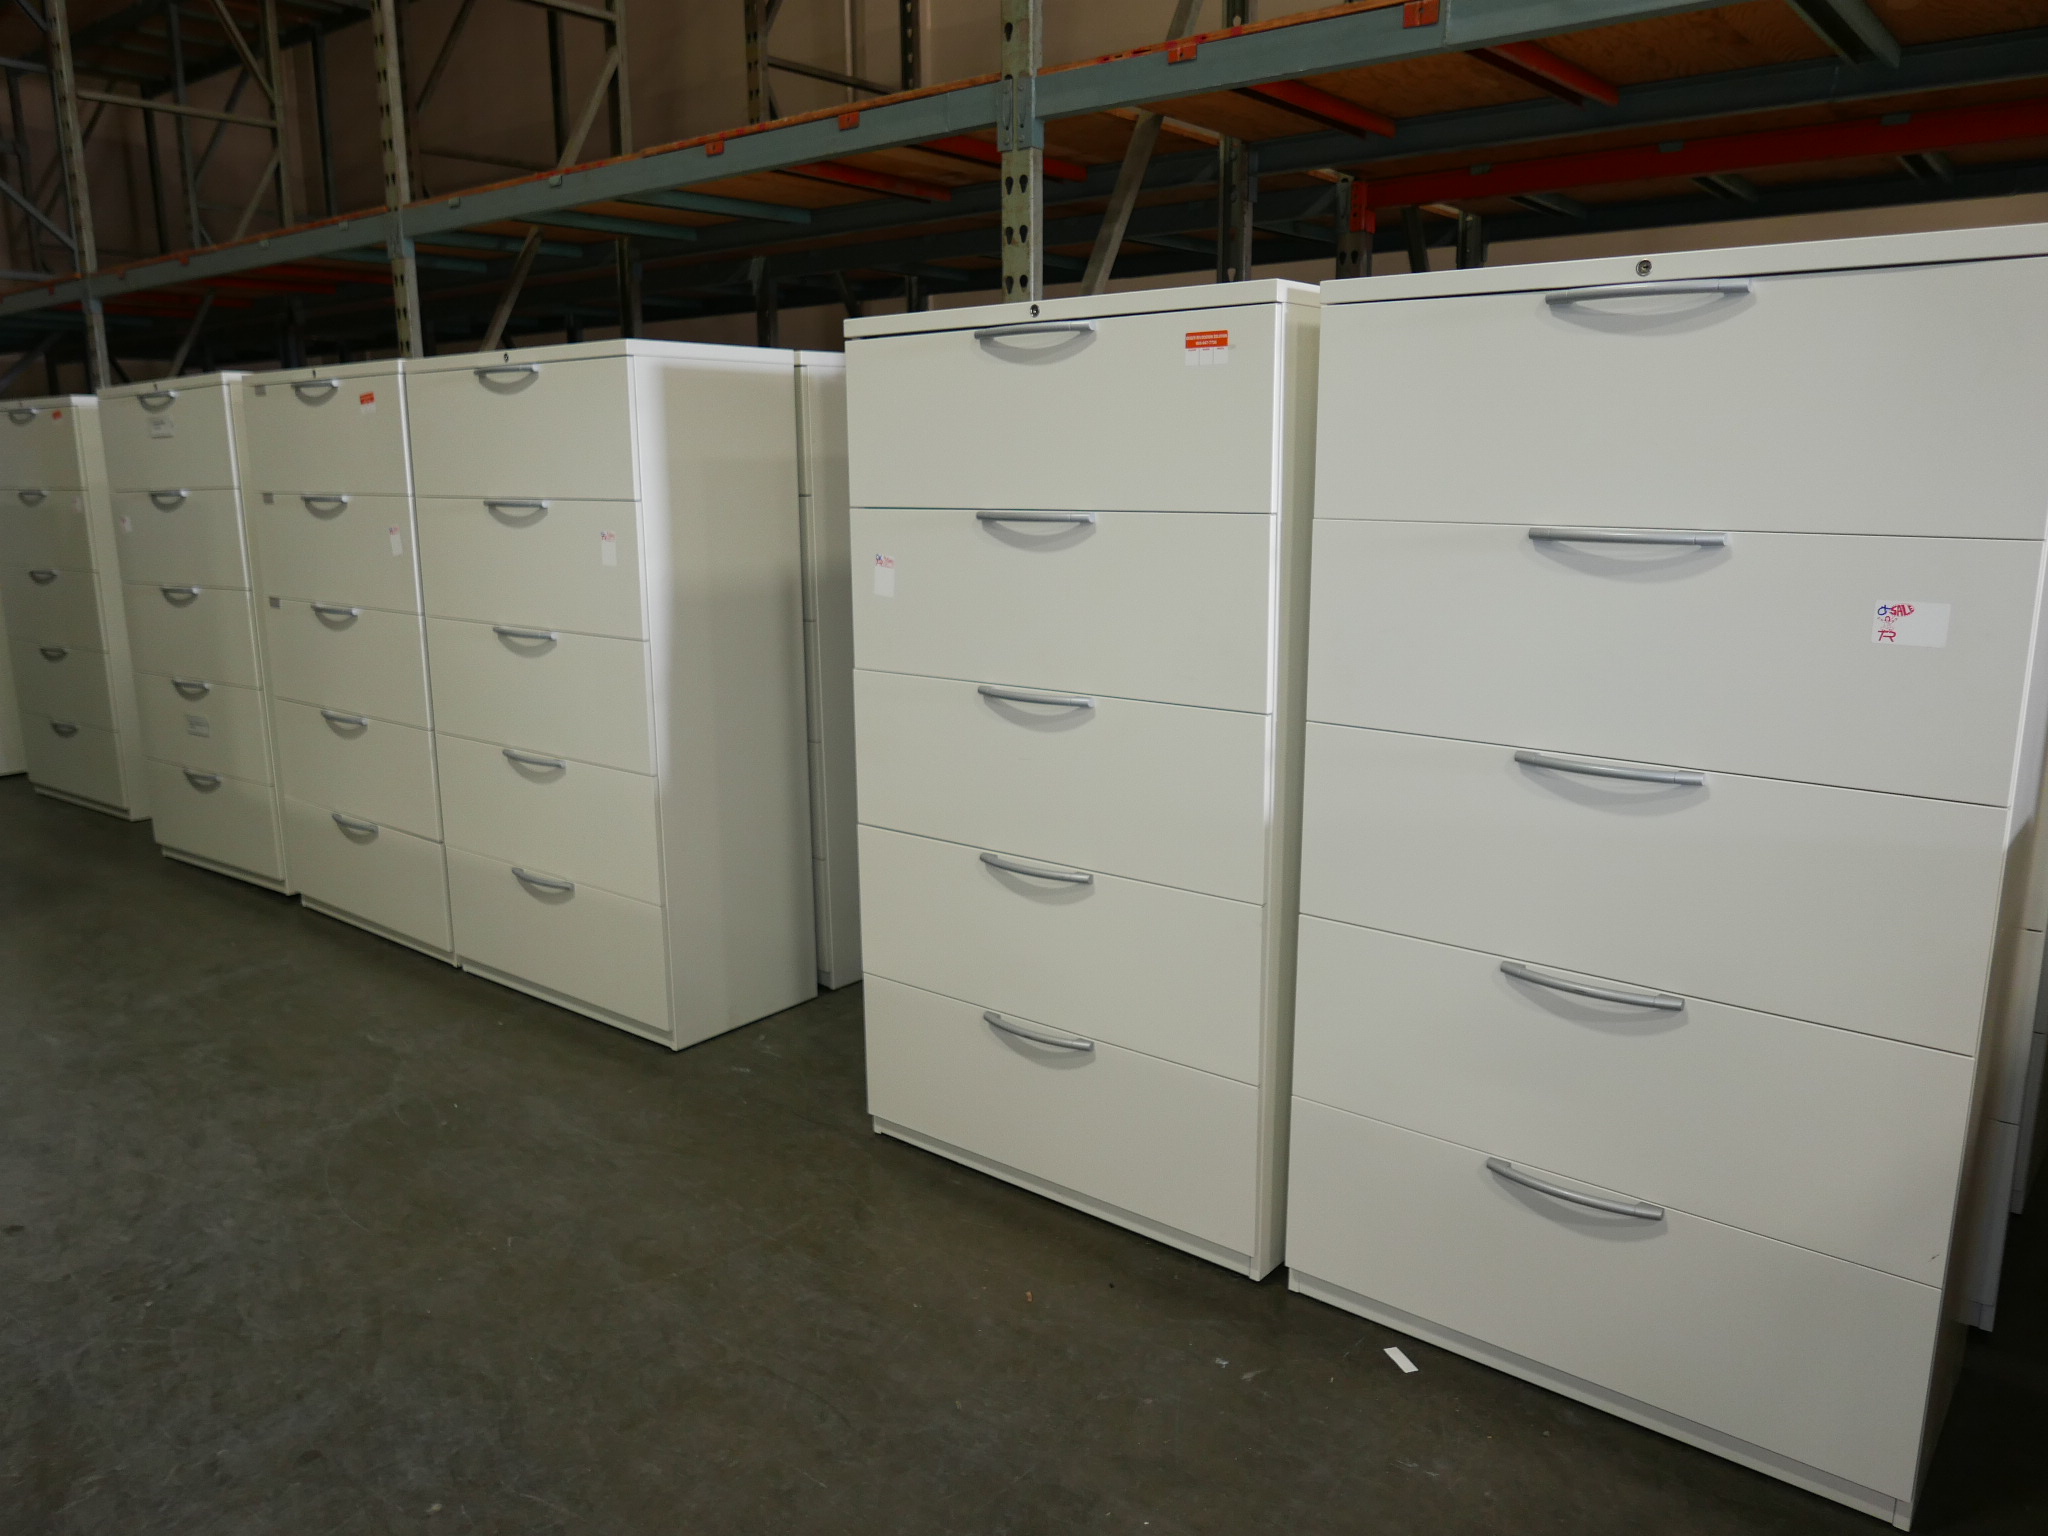 4 Haworth Lateral File Bar 42 Cabinets Racks Shelves File